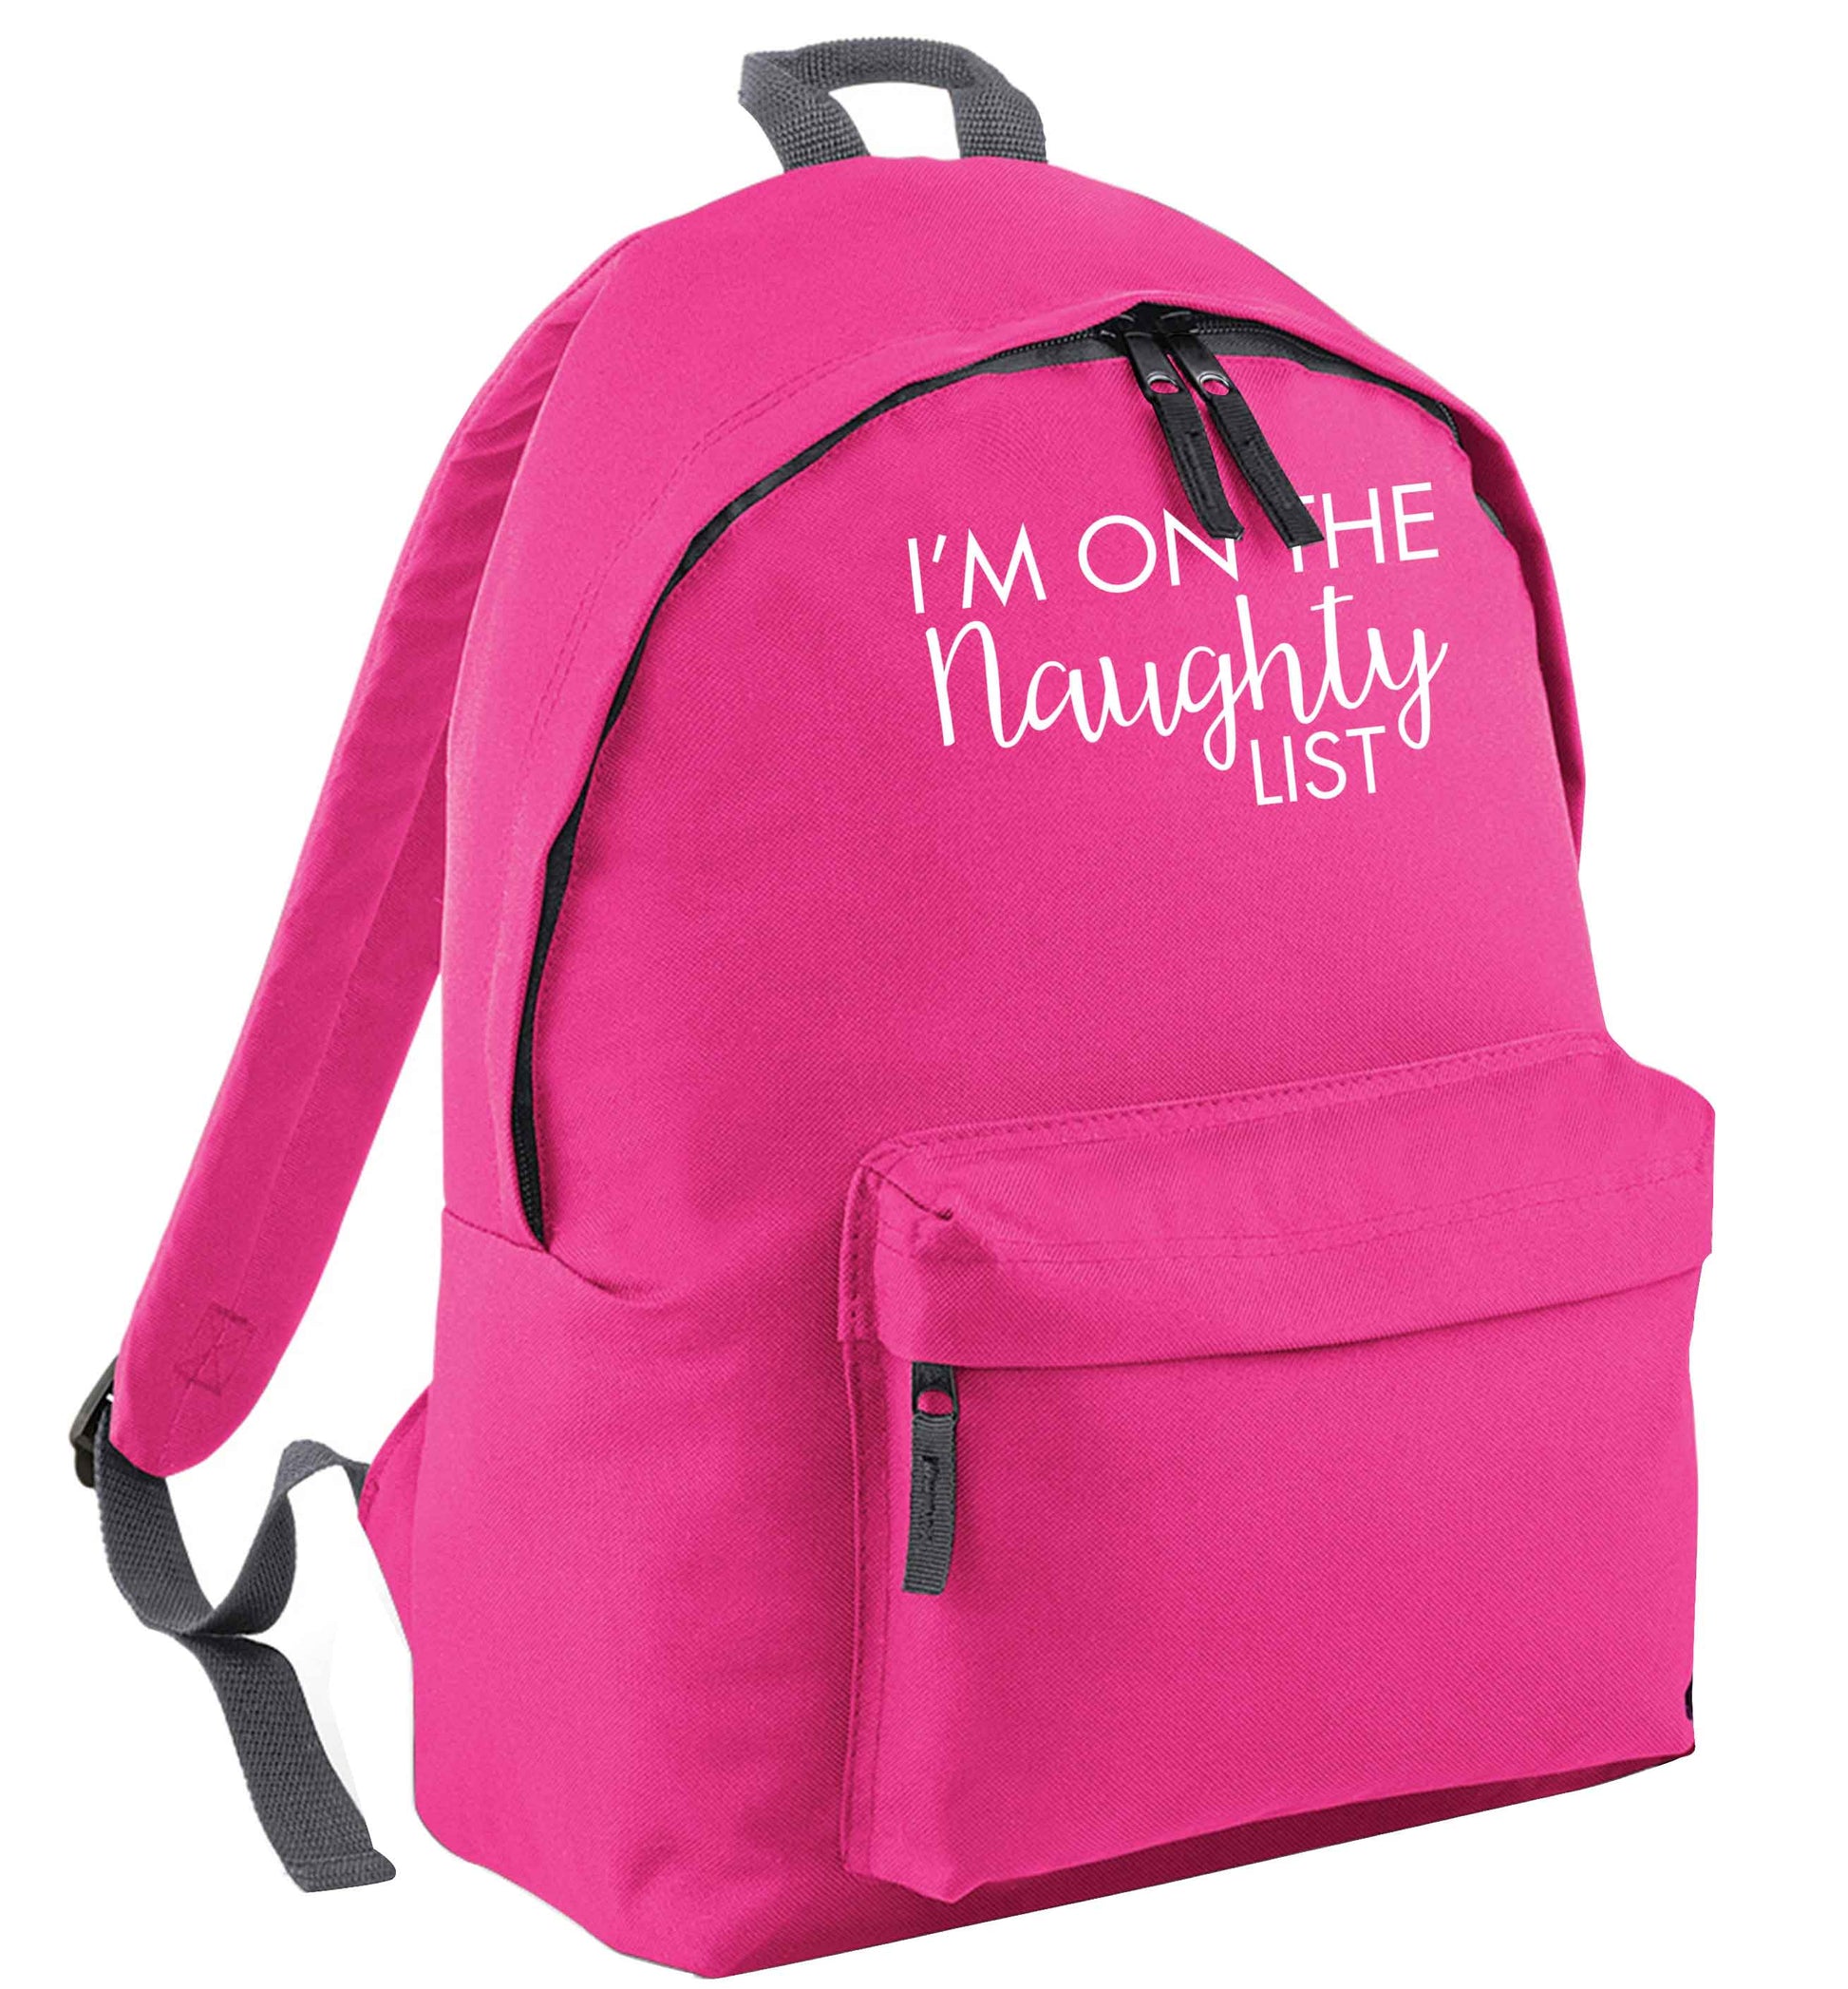 I'm on the naughty list | Children's backpack